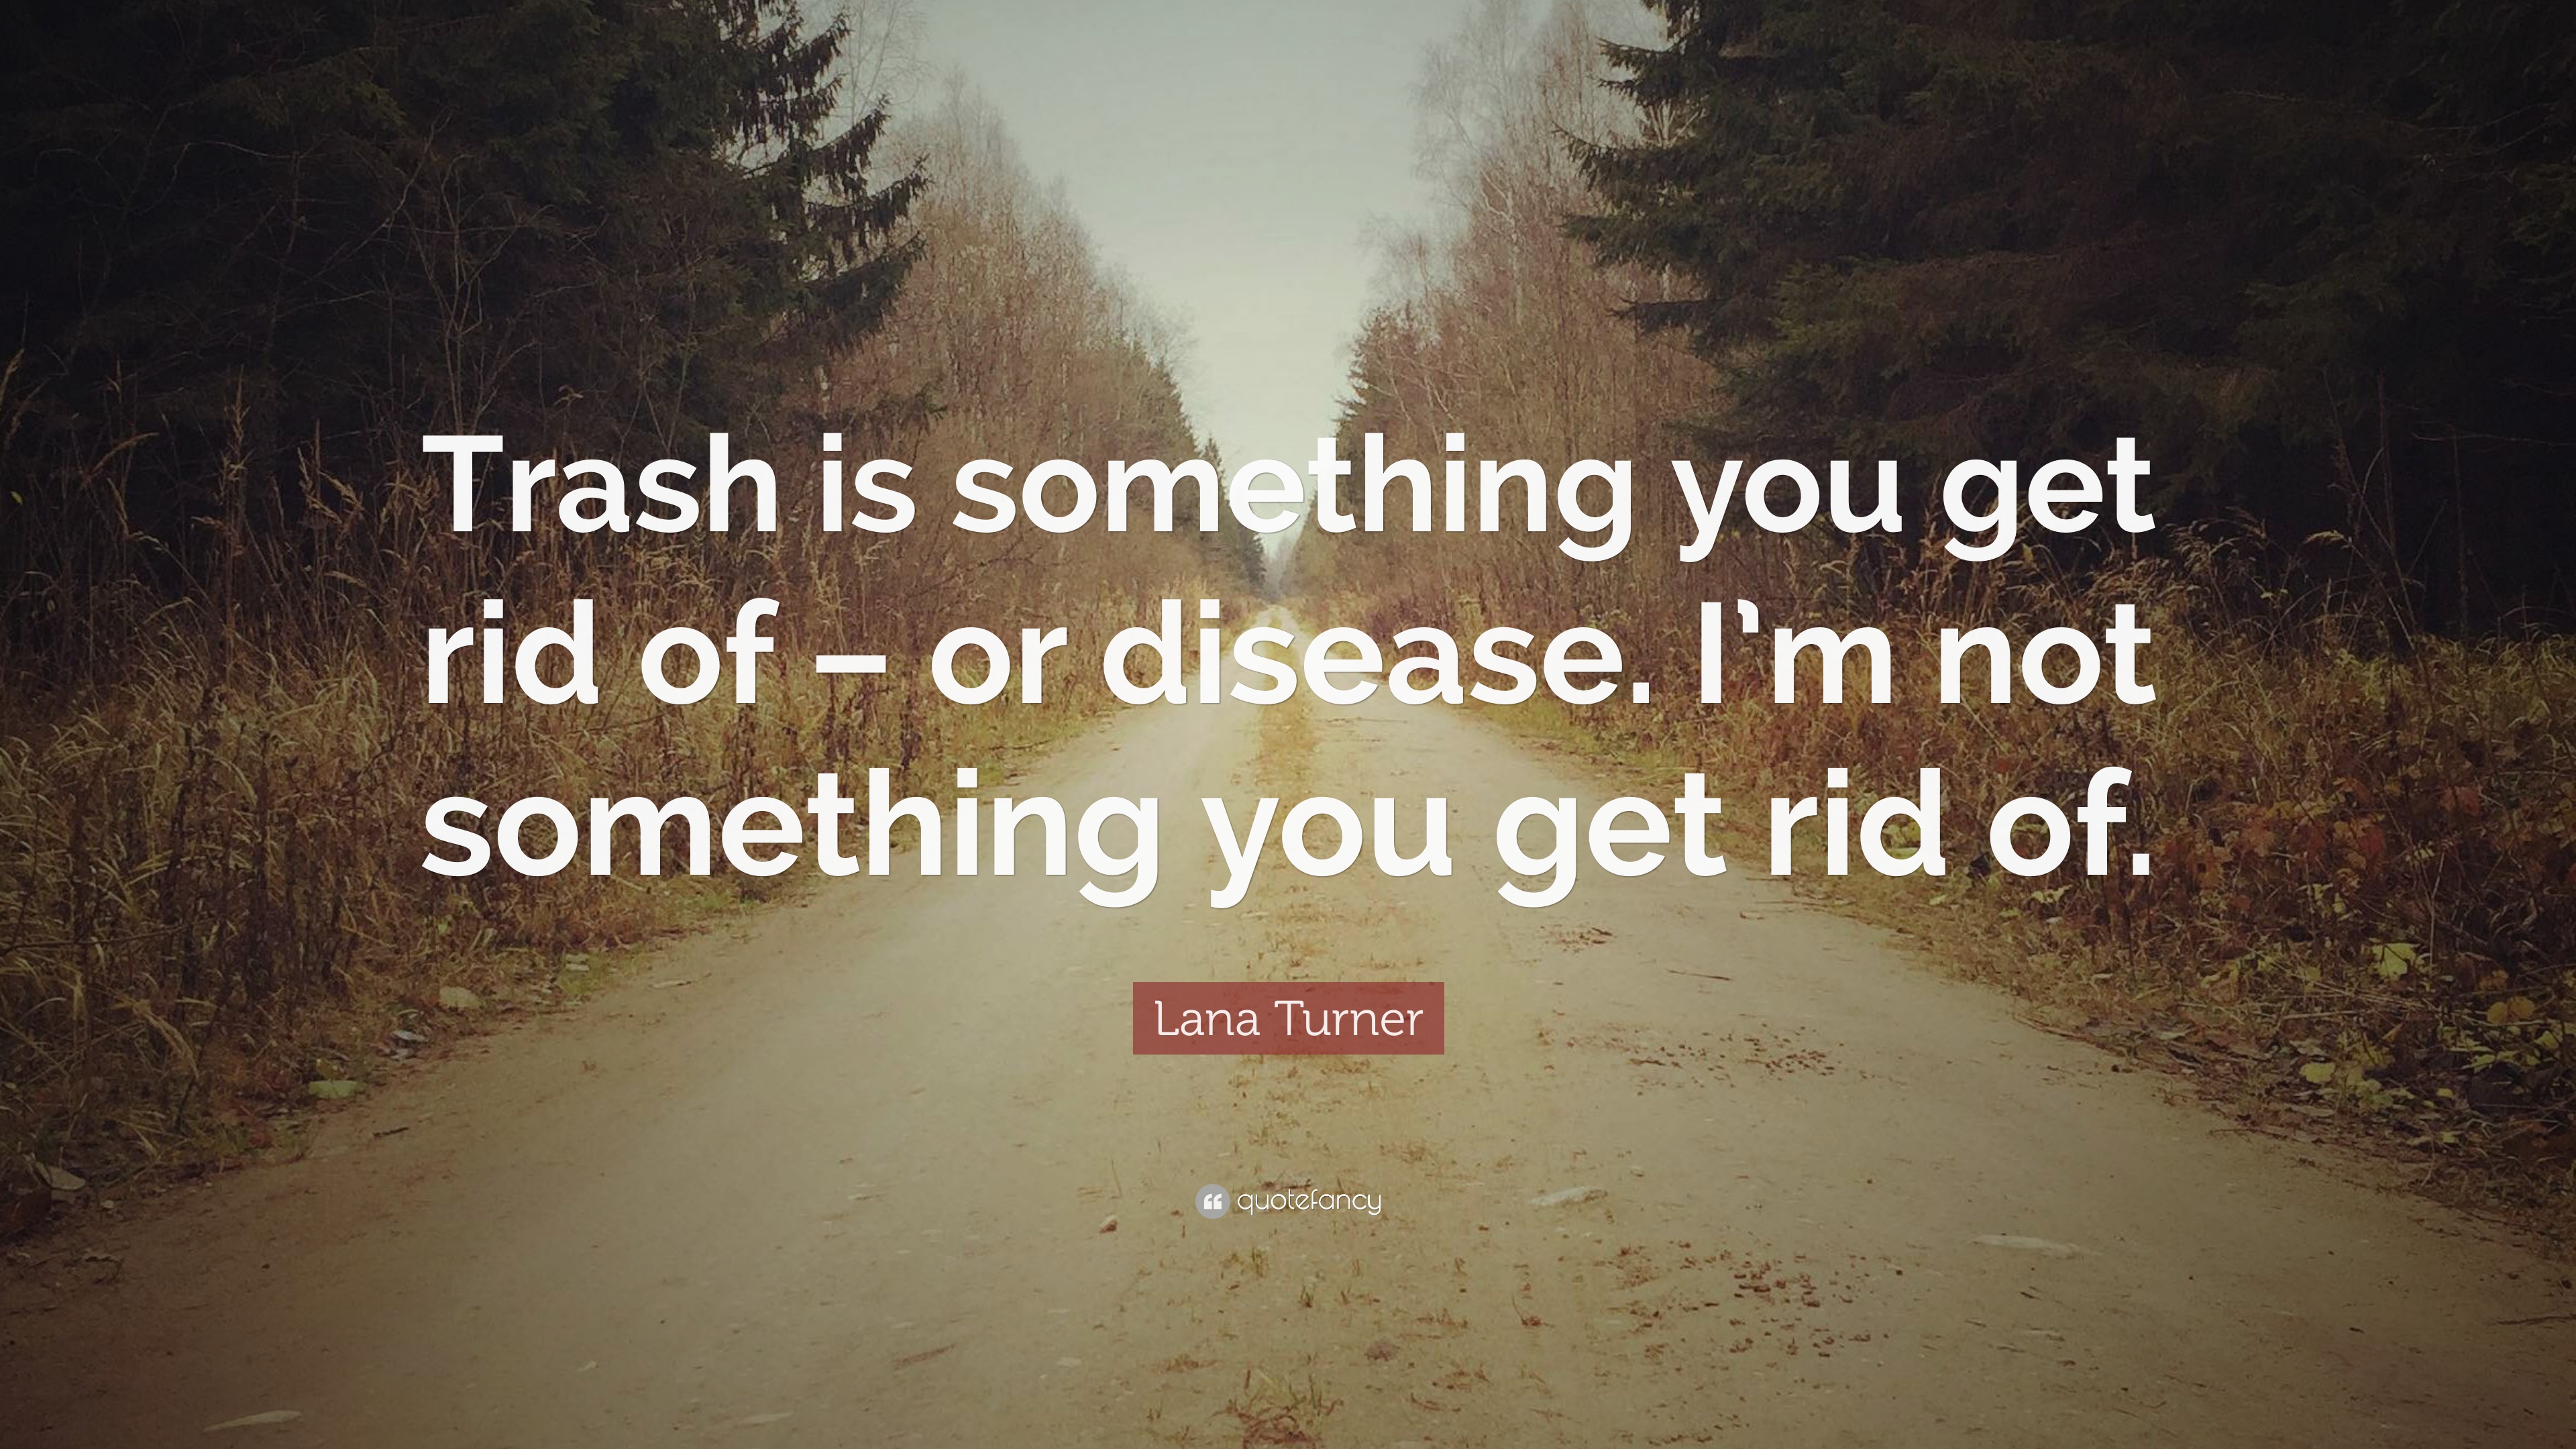 Lana Turner Quote: “Trash is something you get rid of